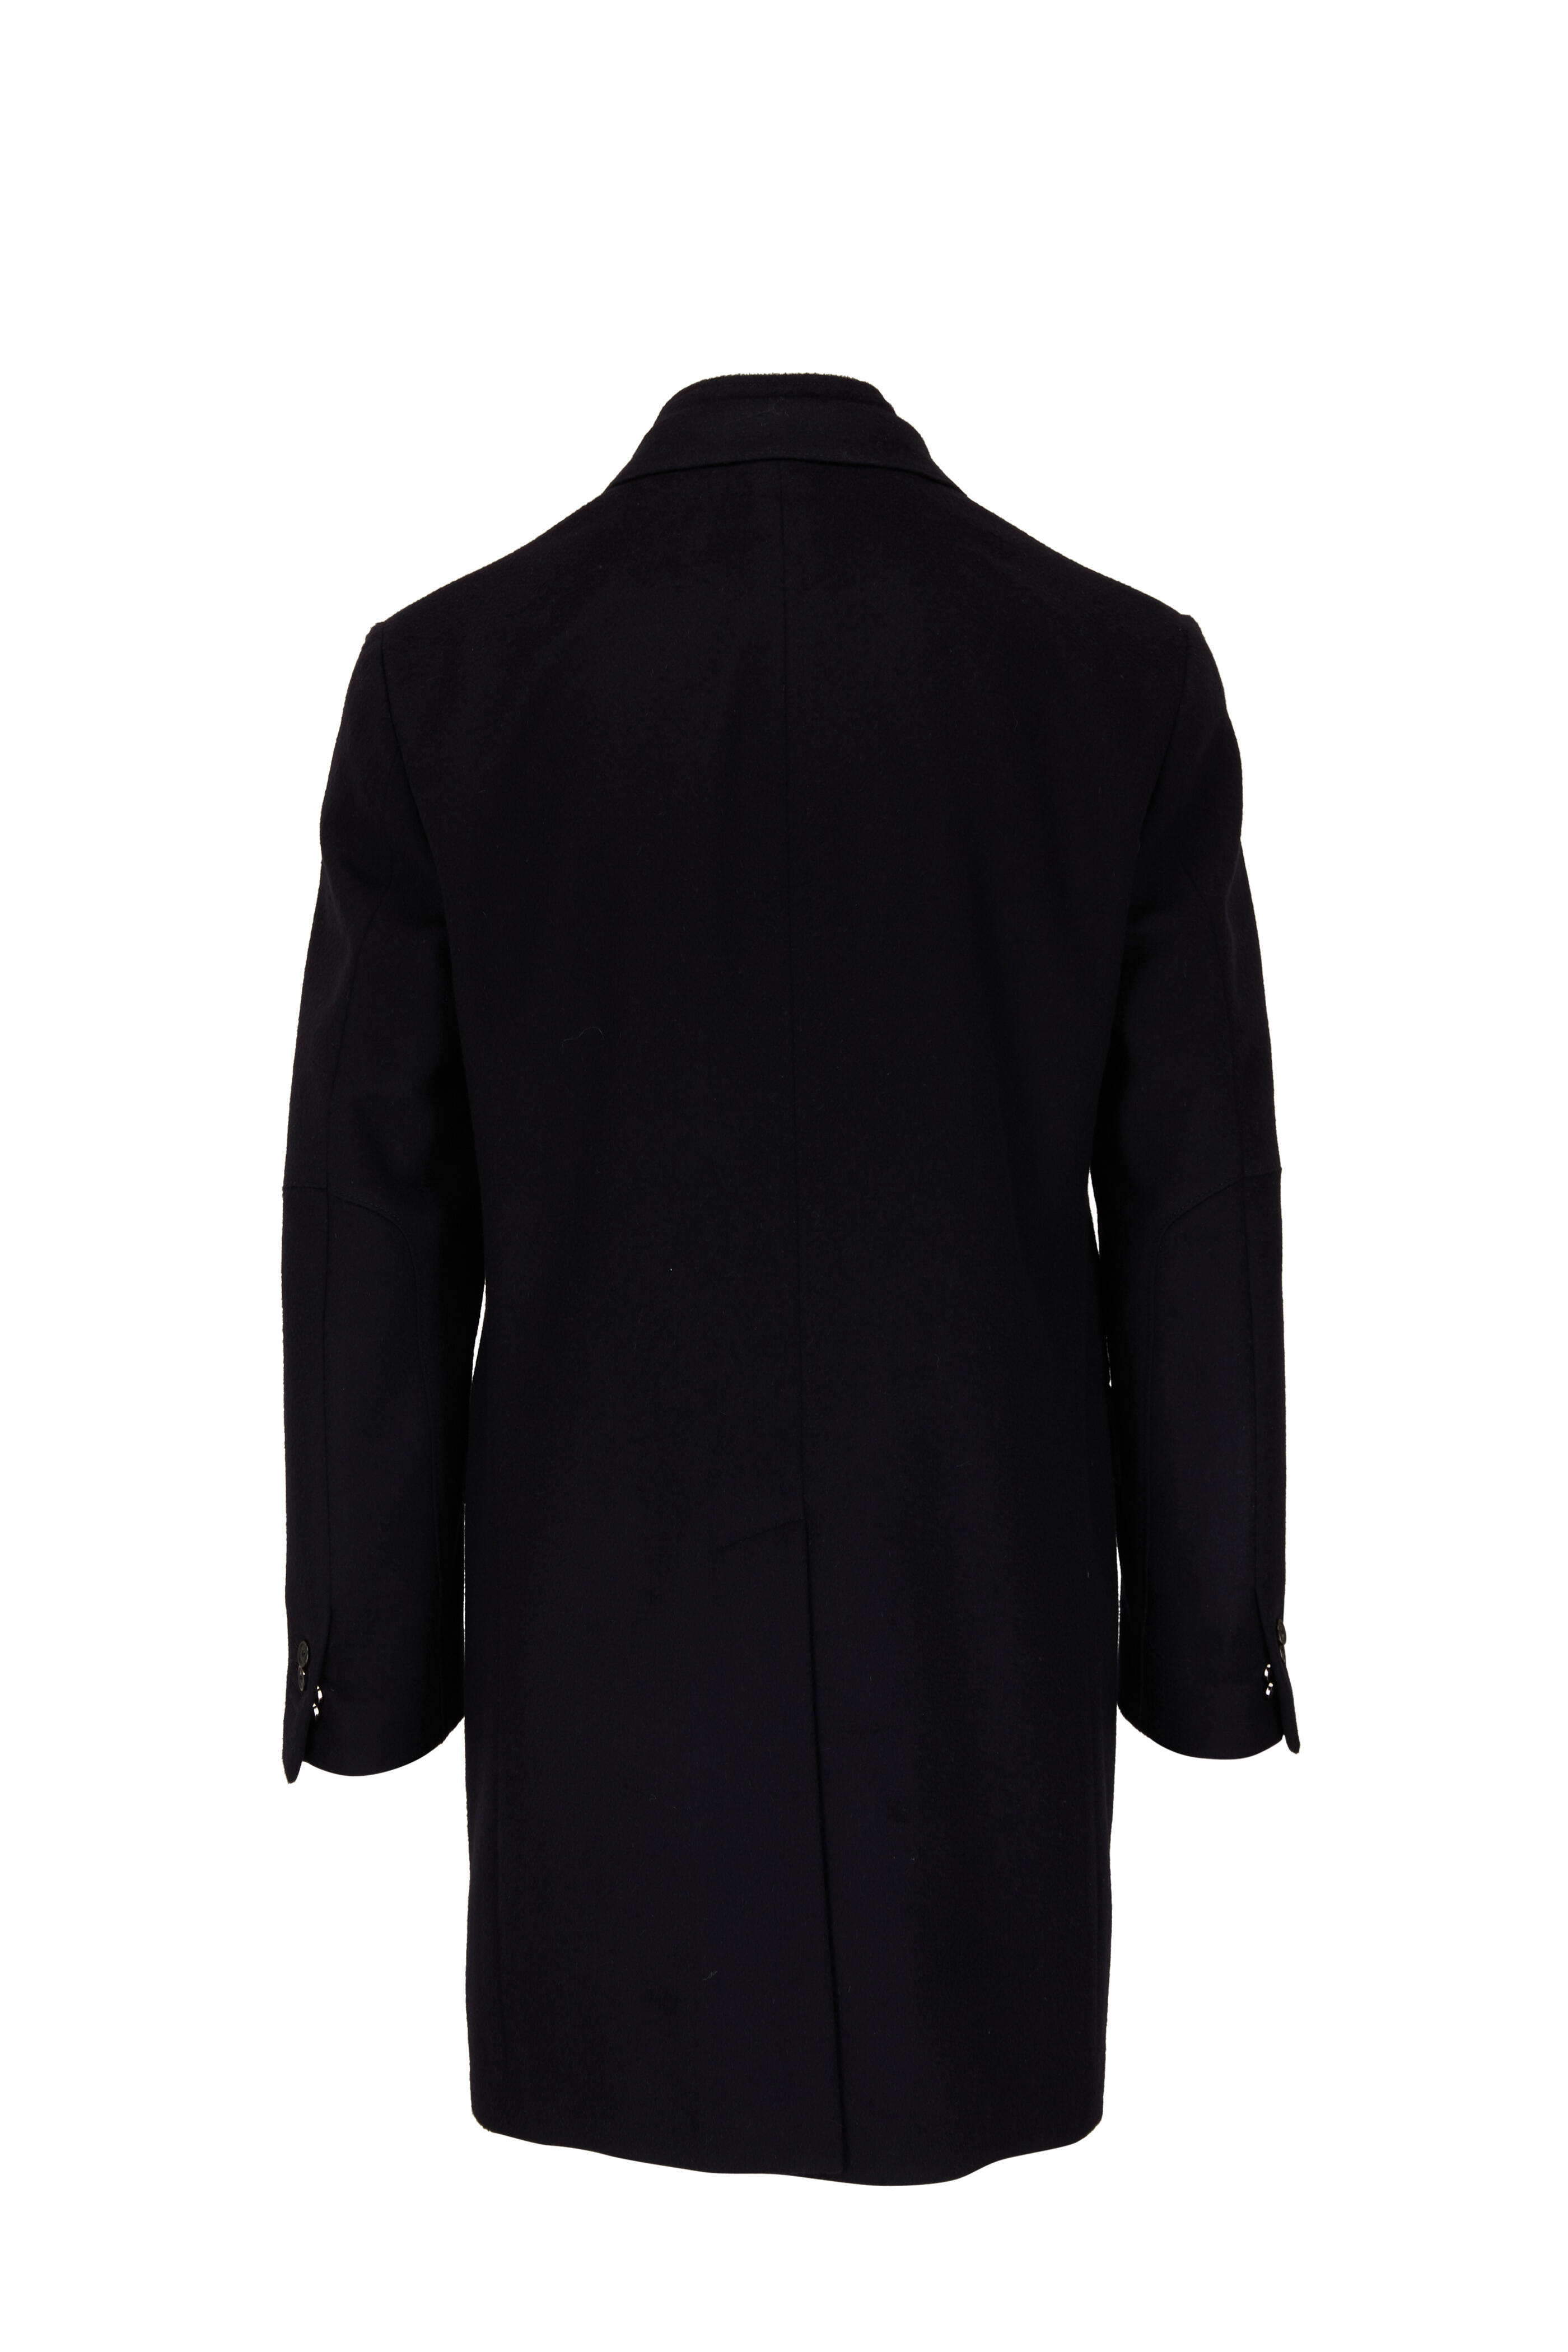 Corneliani - Navy Blue Virgin Wool Topcoat | Mitchell Stores